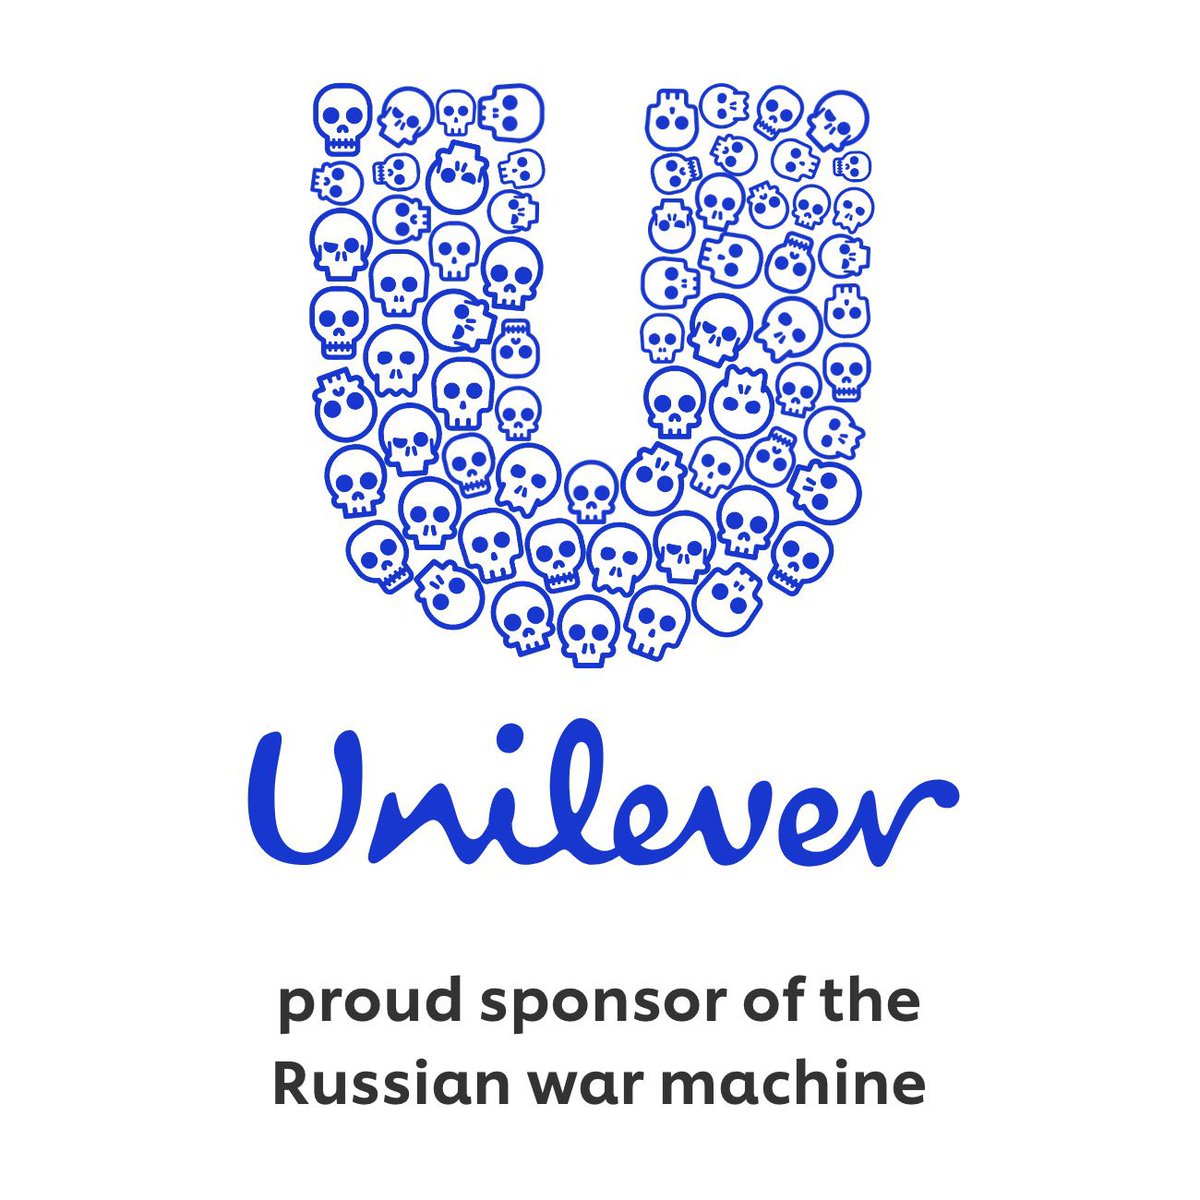 @Unilever @InfluenceMap #boycottunilever